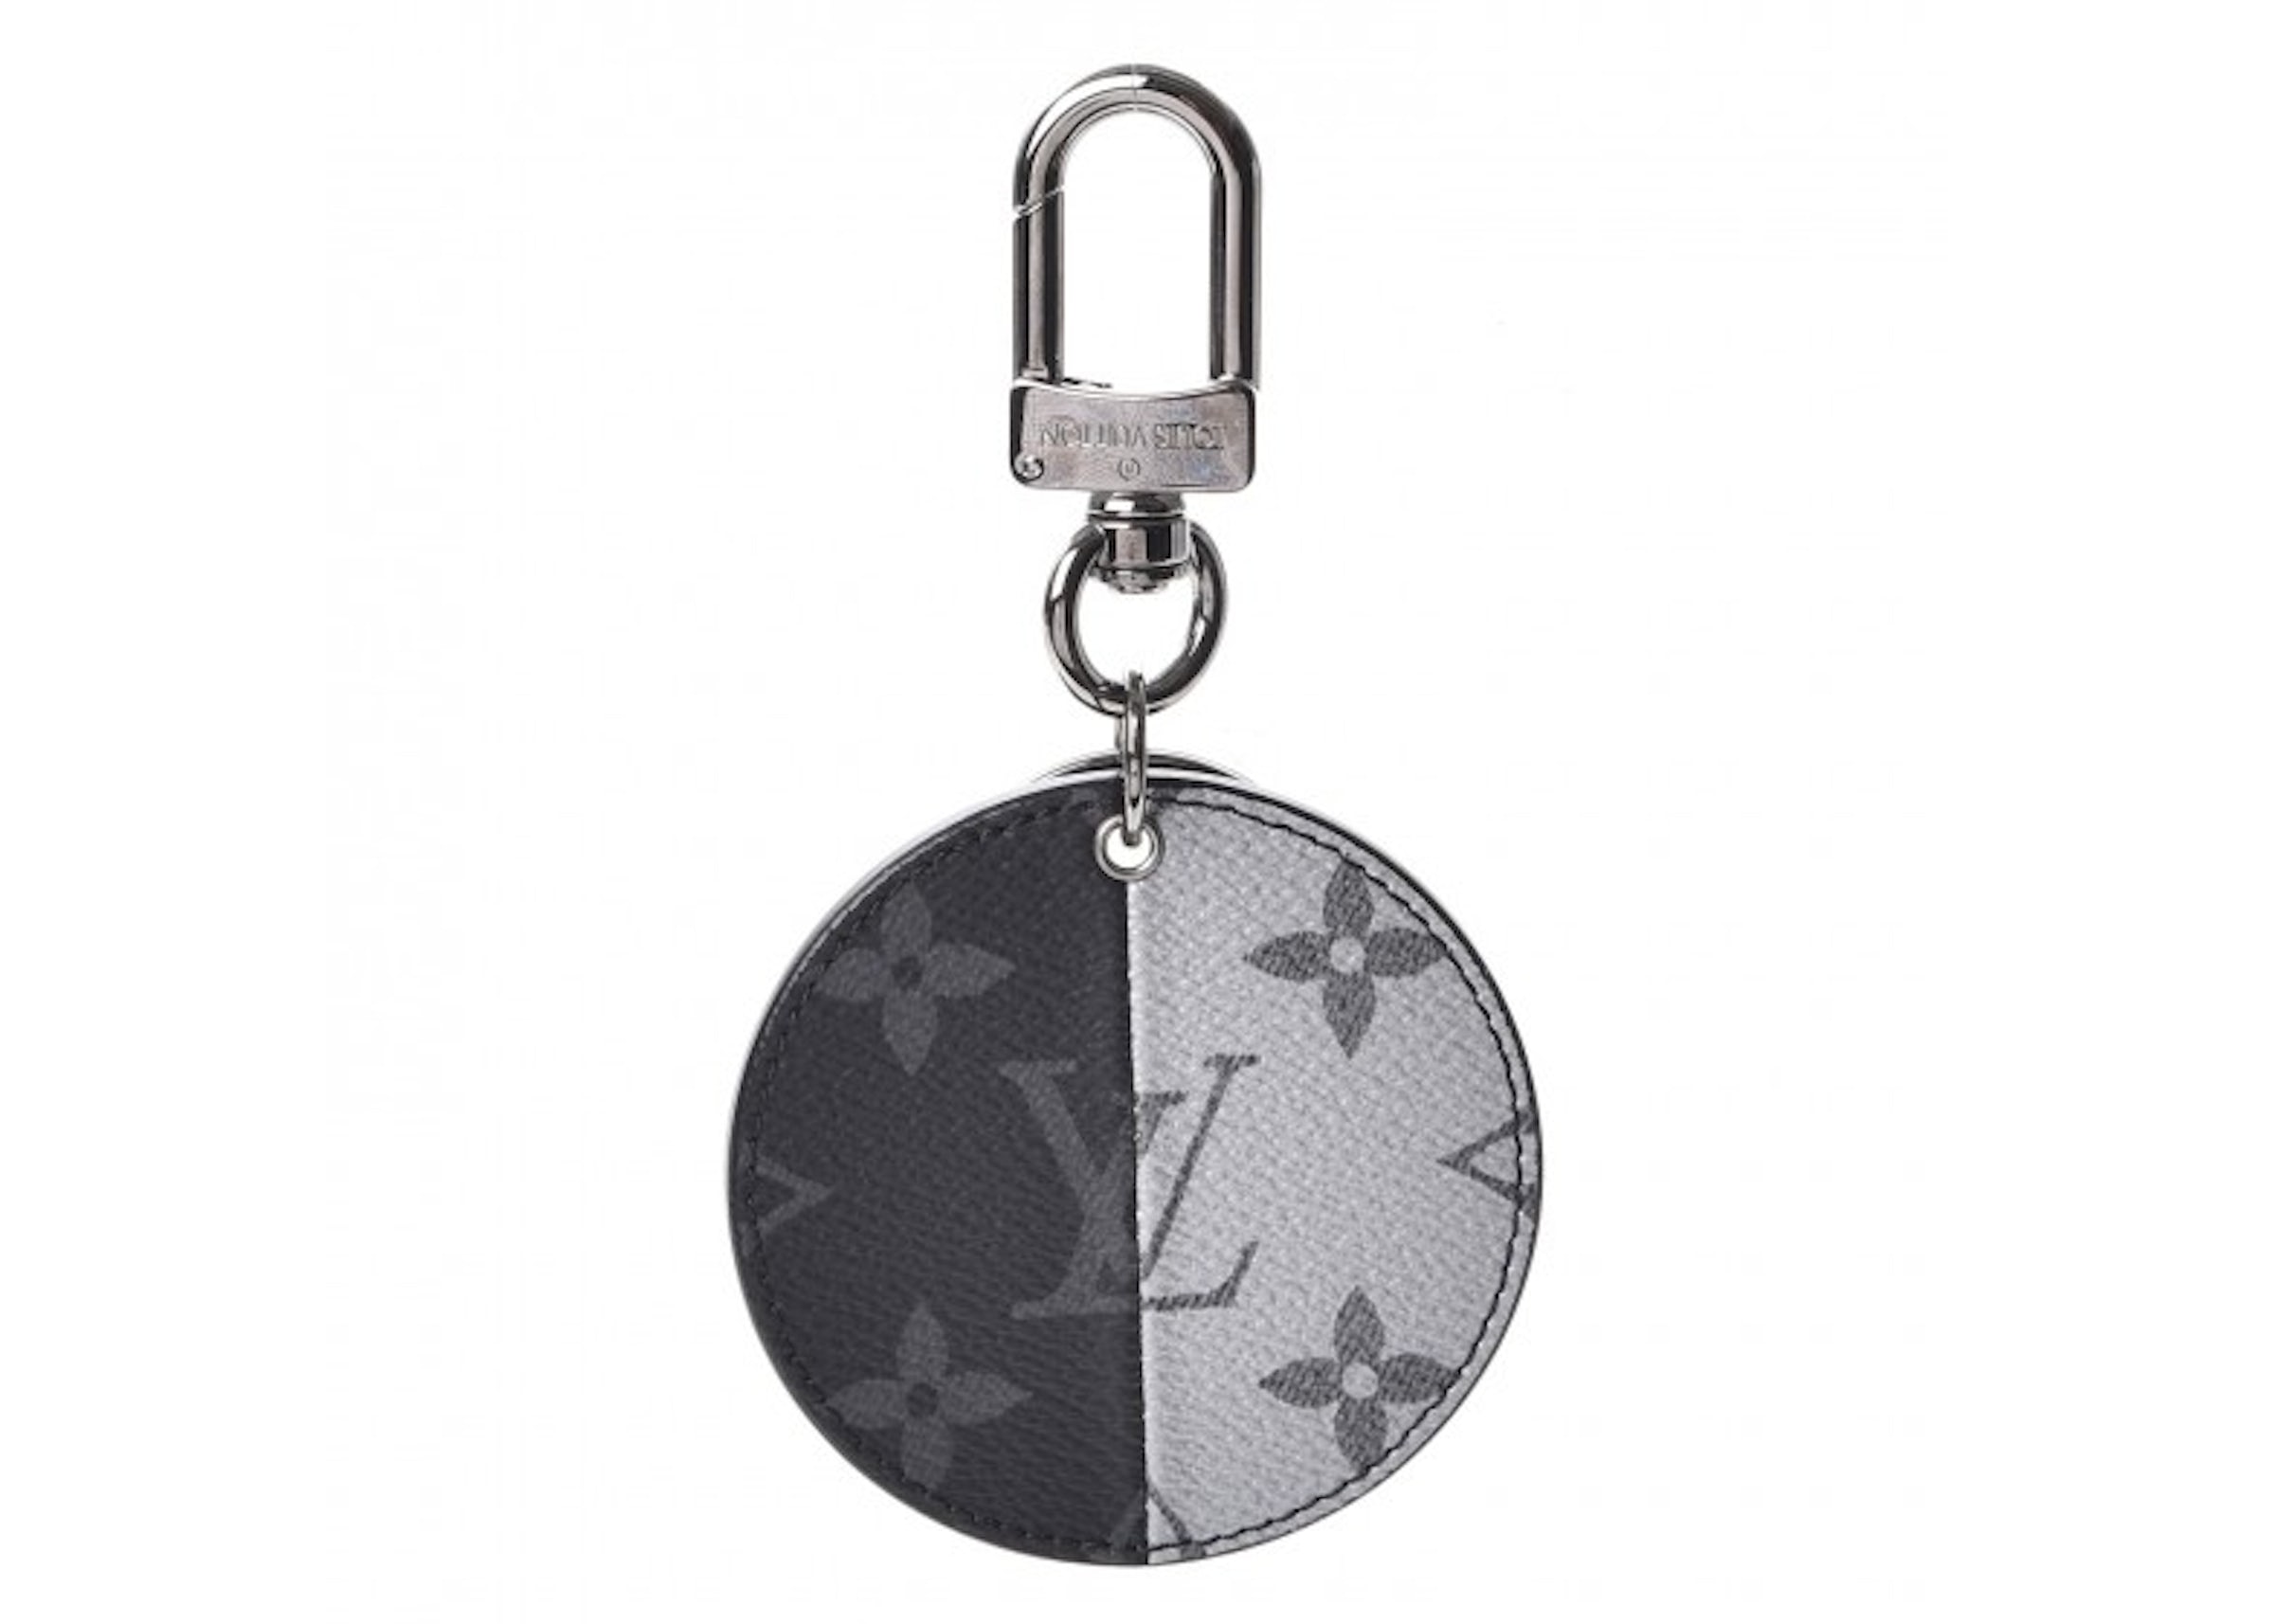 Louis Vuitton Bag Charm Monogram Eclipse Split Black/White/Blue